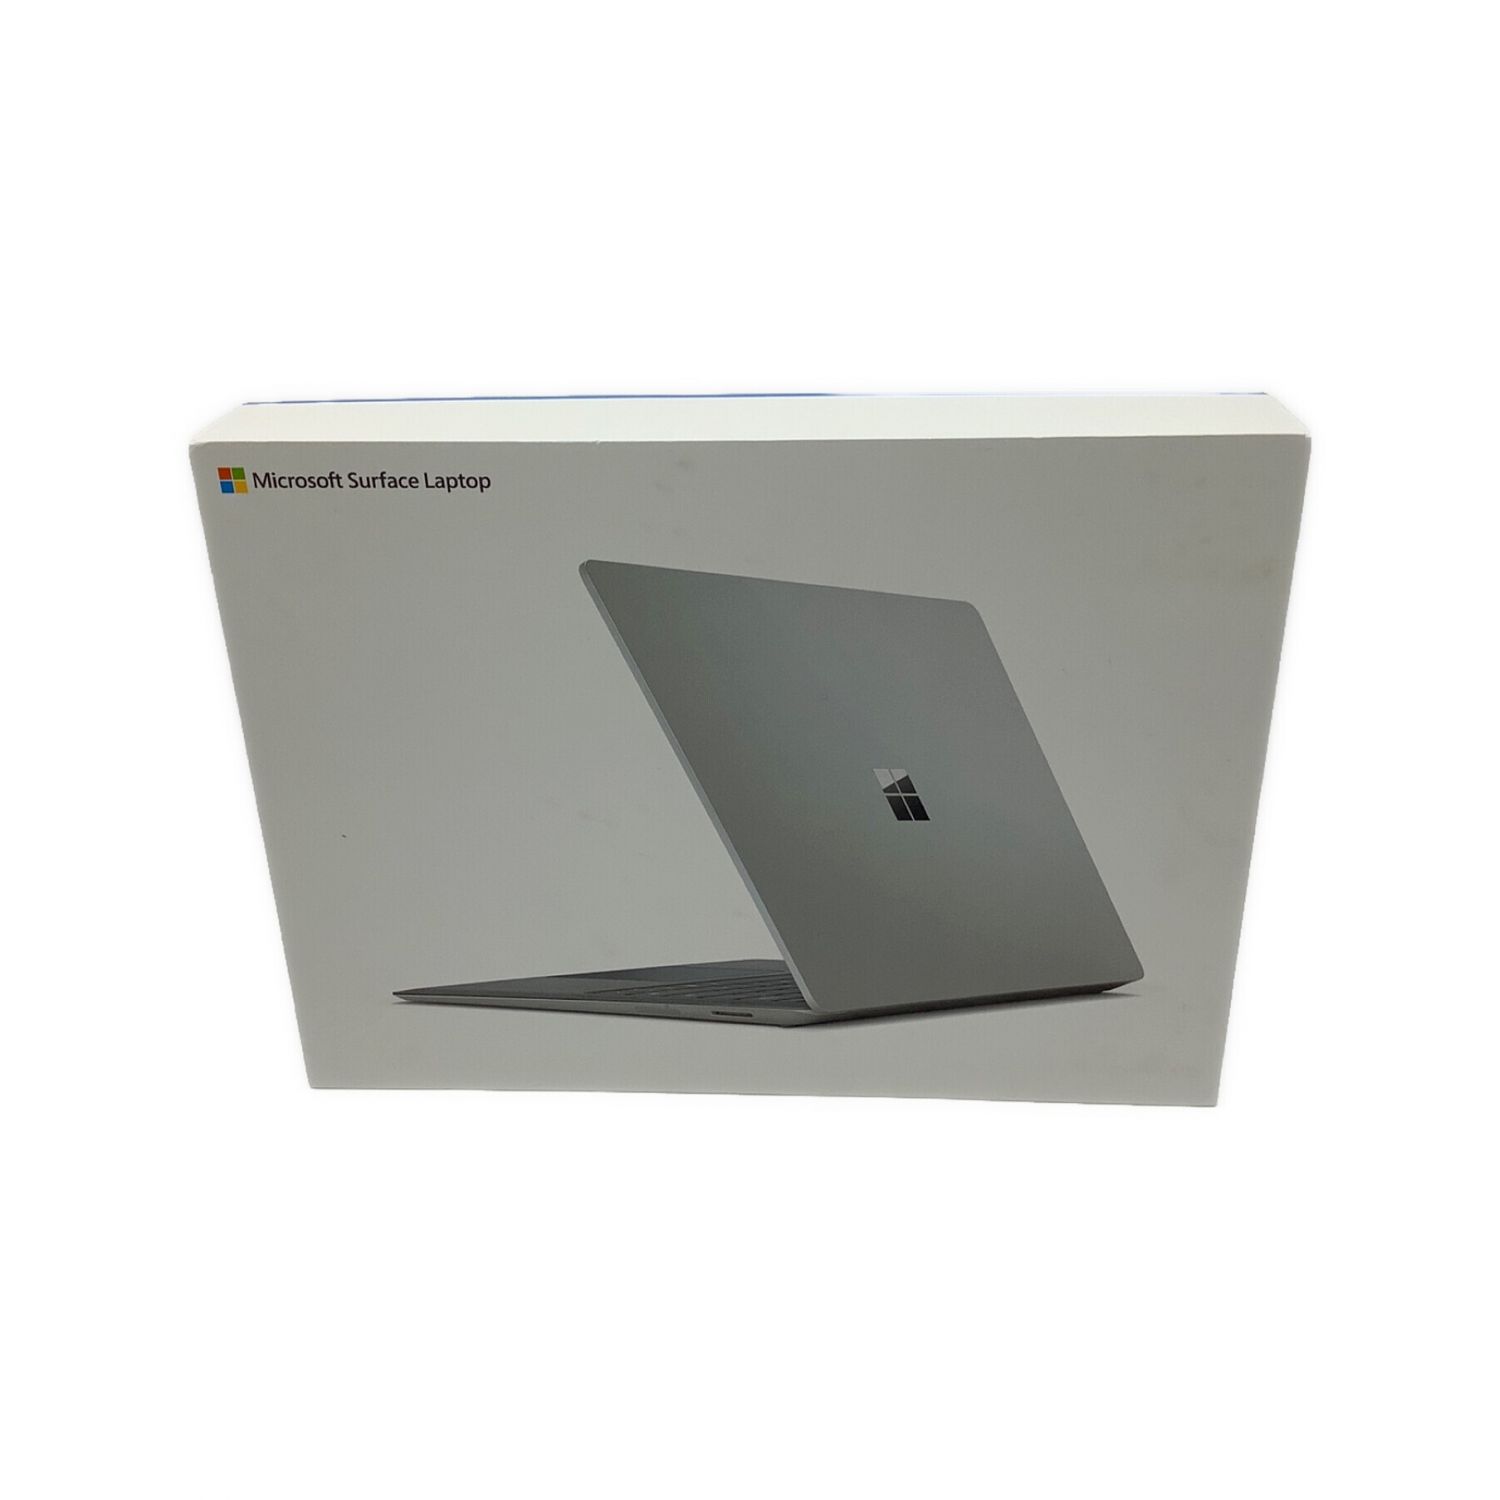 Microsoft (マイクロソフト) Surface Laptop 1769 Core i5 メモリ:8GB 